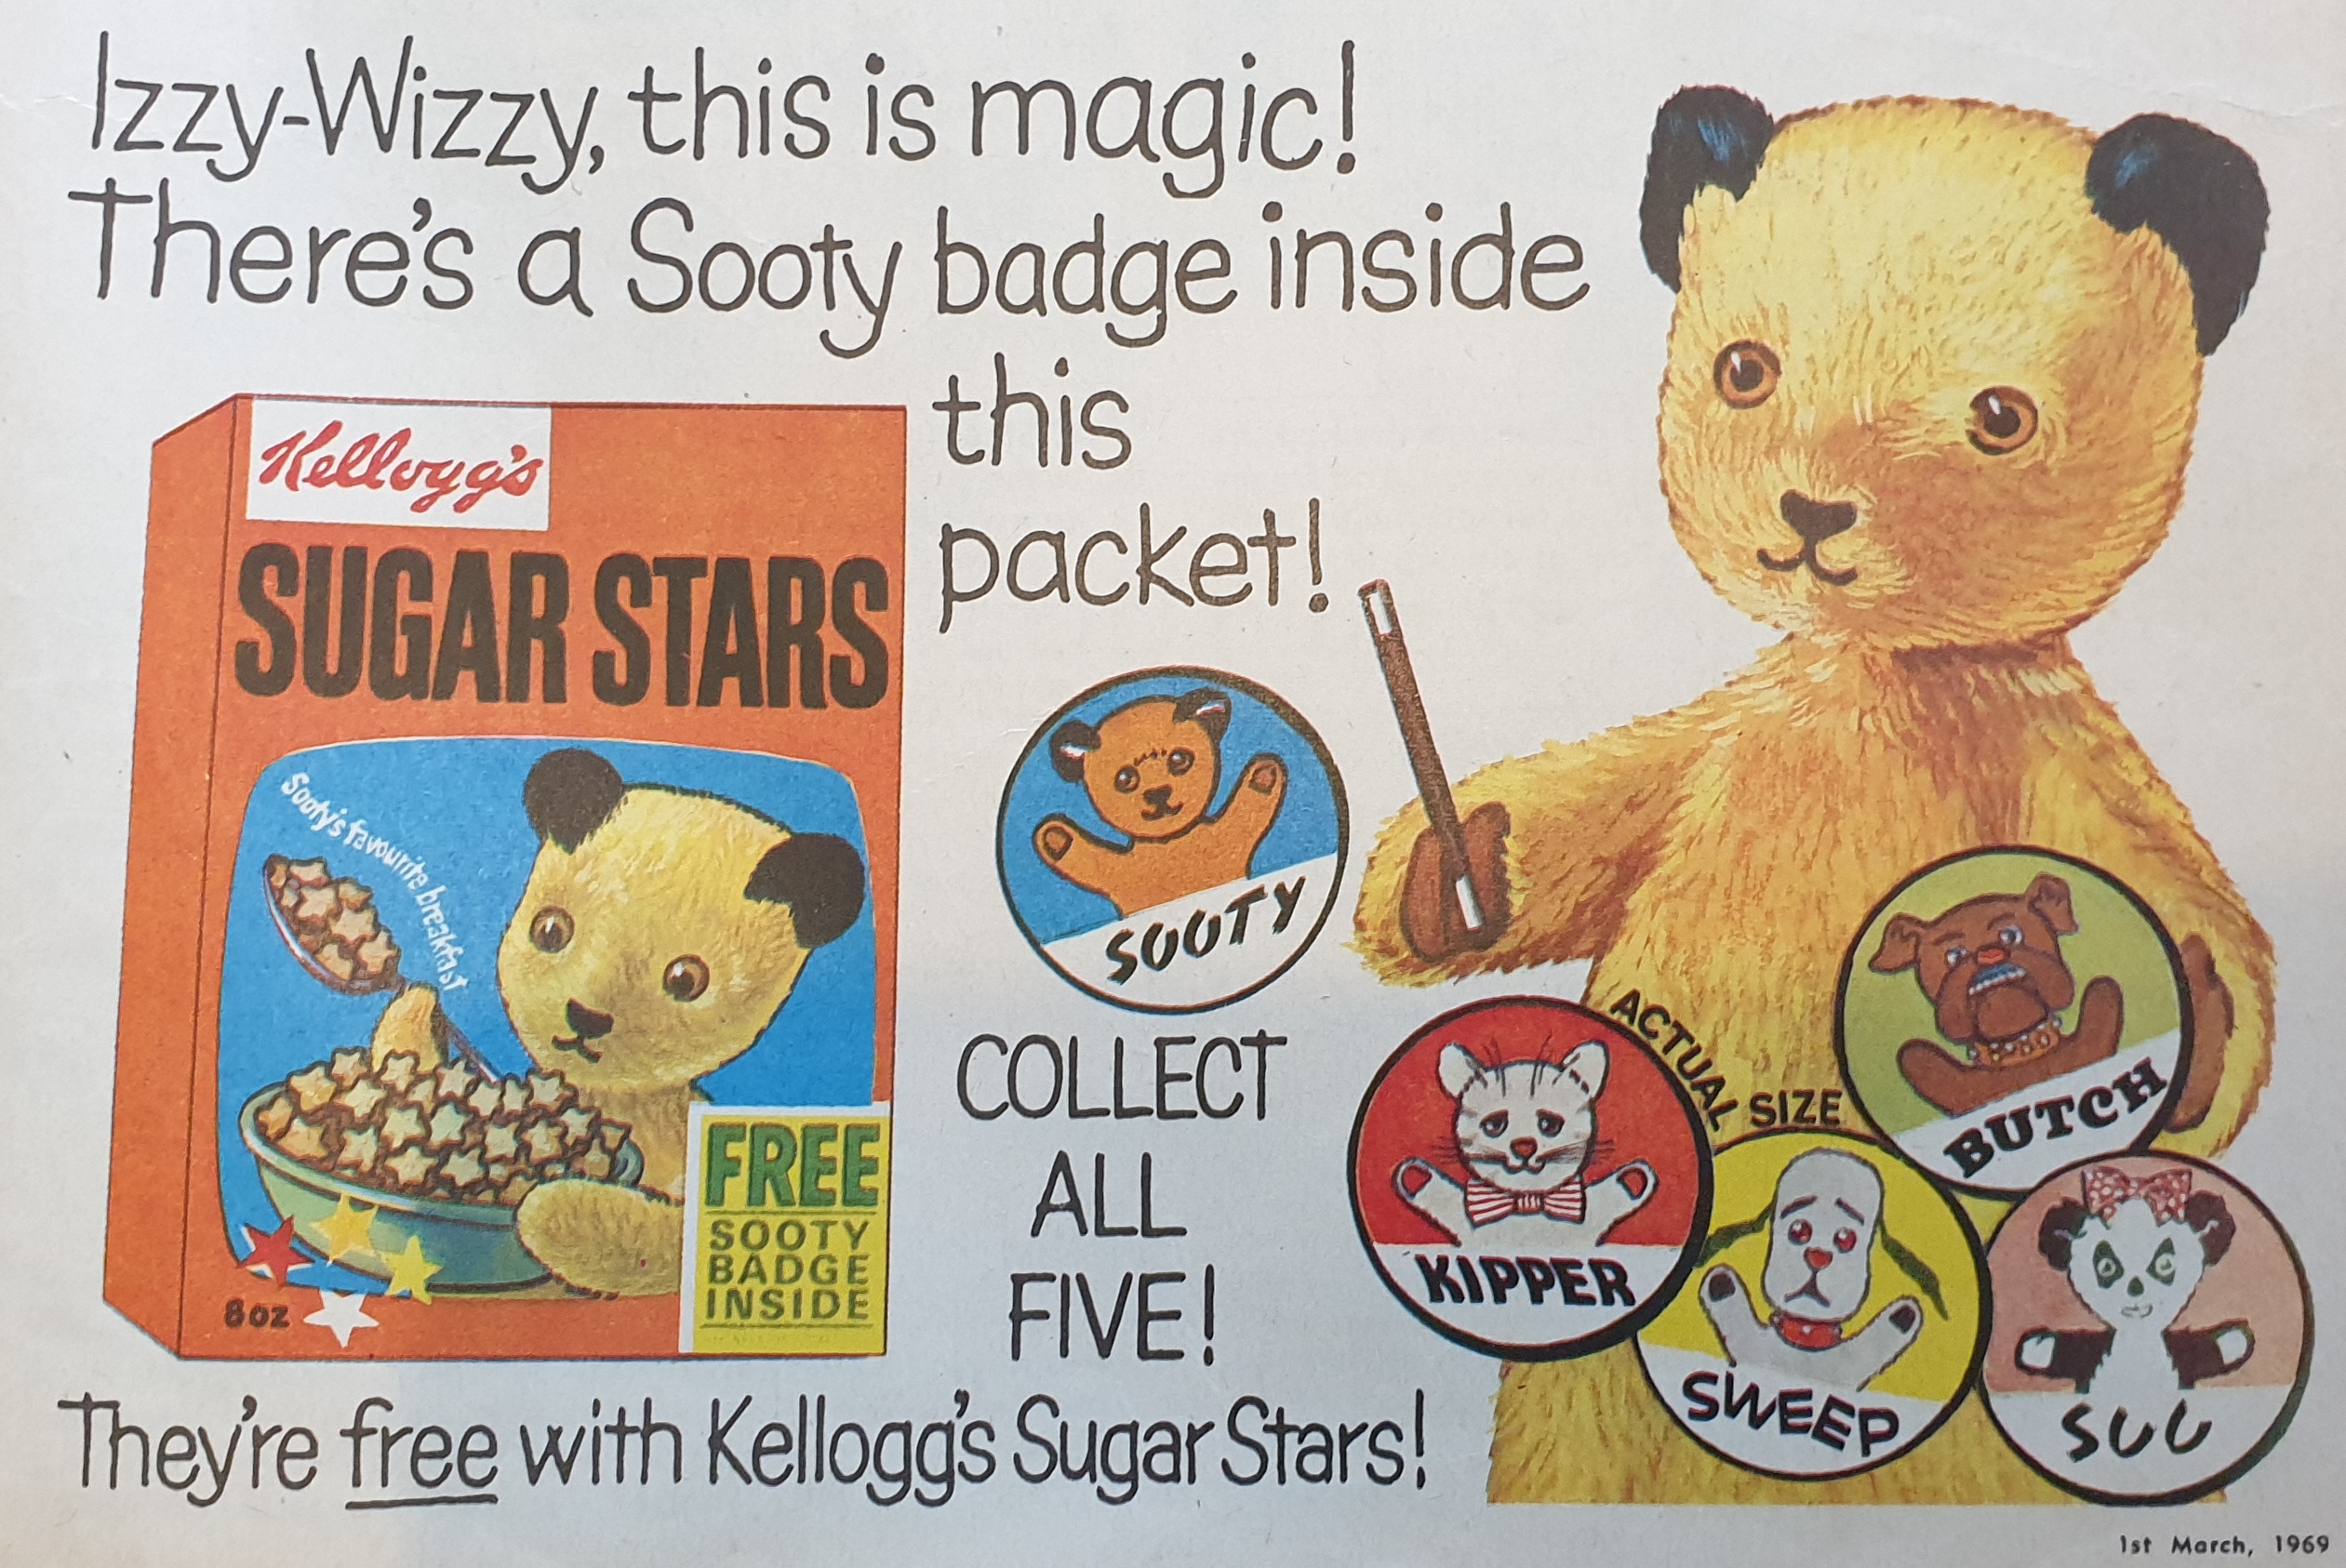 1969 Sugar Stars Sooty Badges1